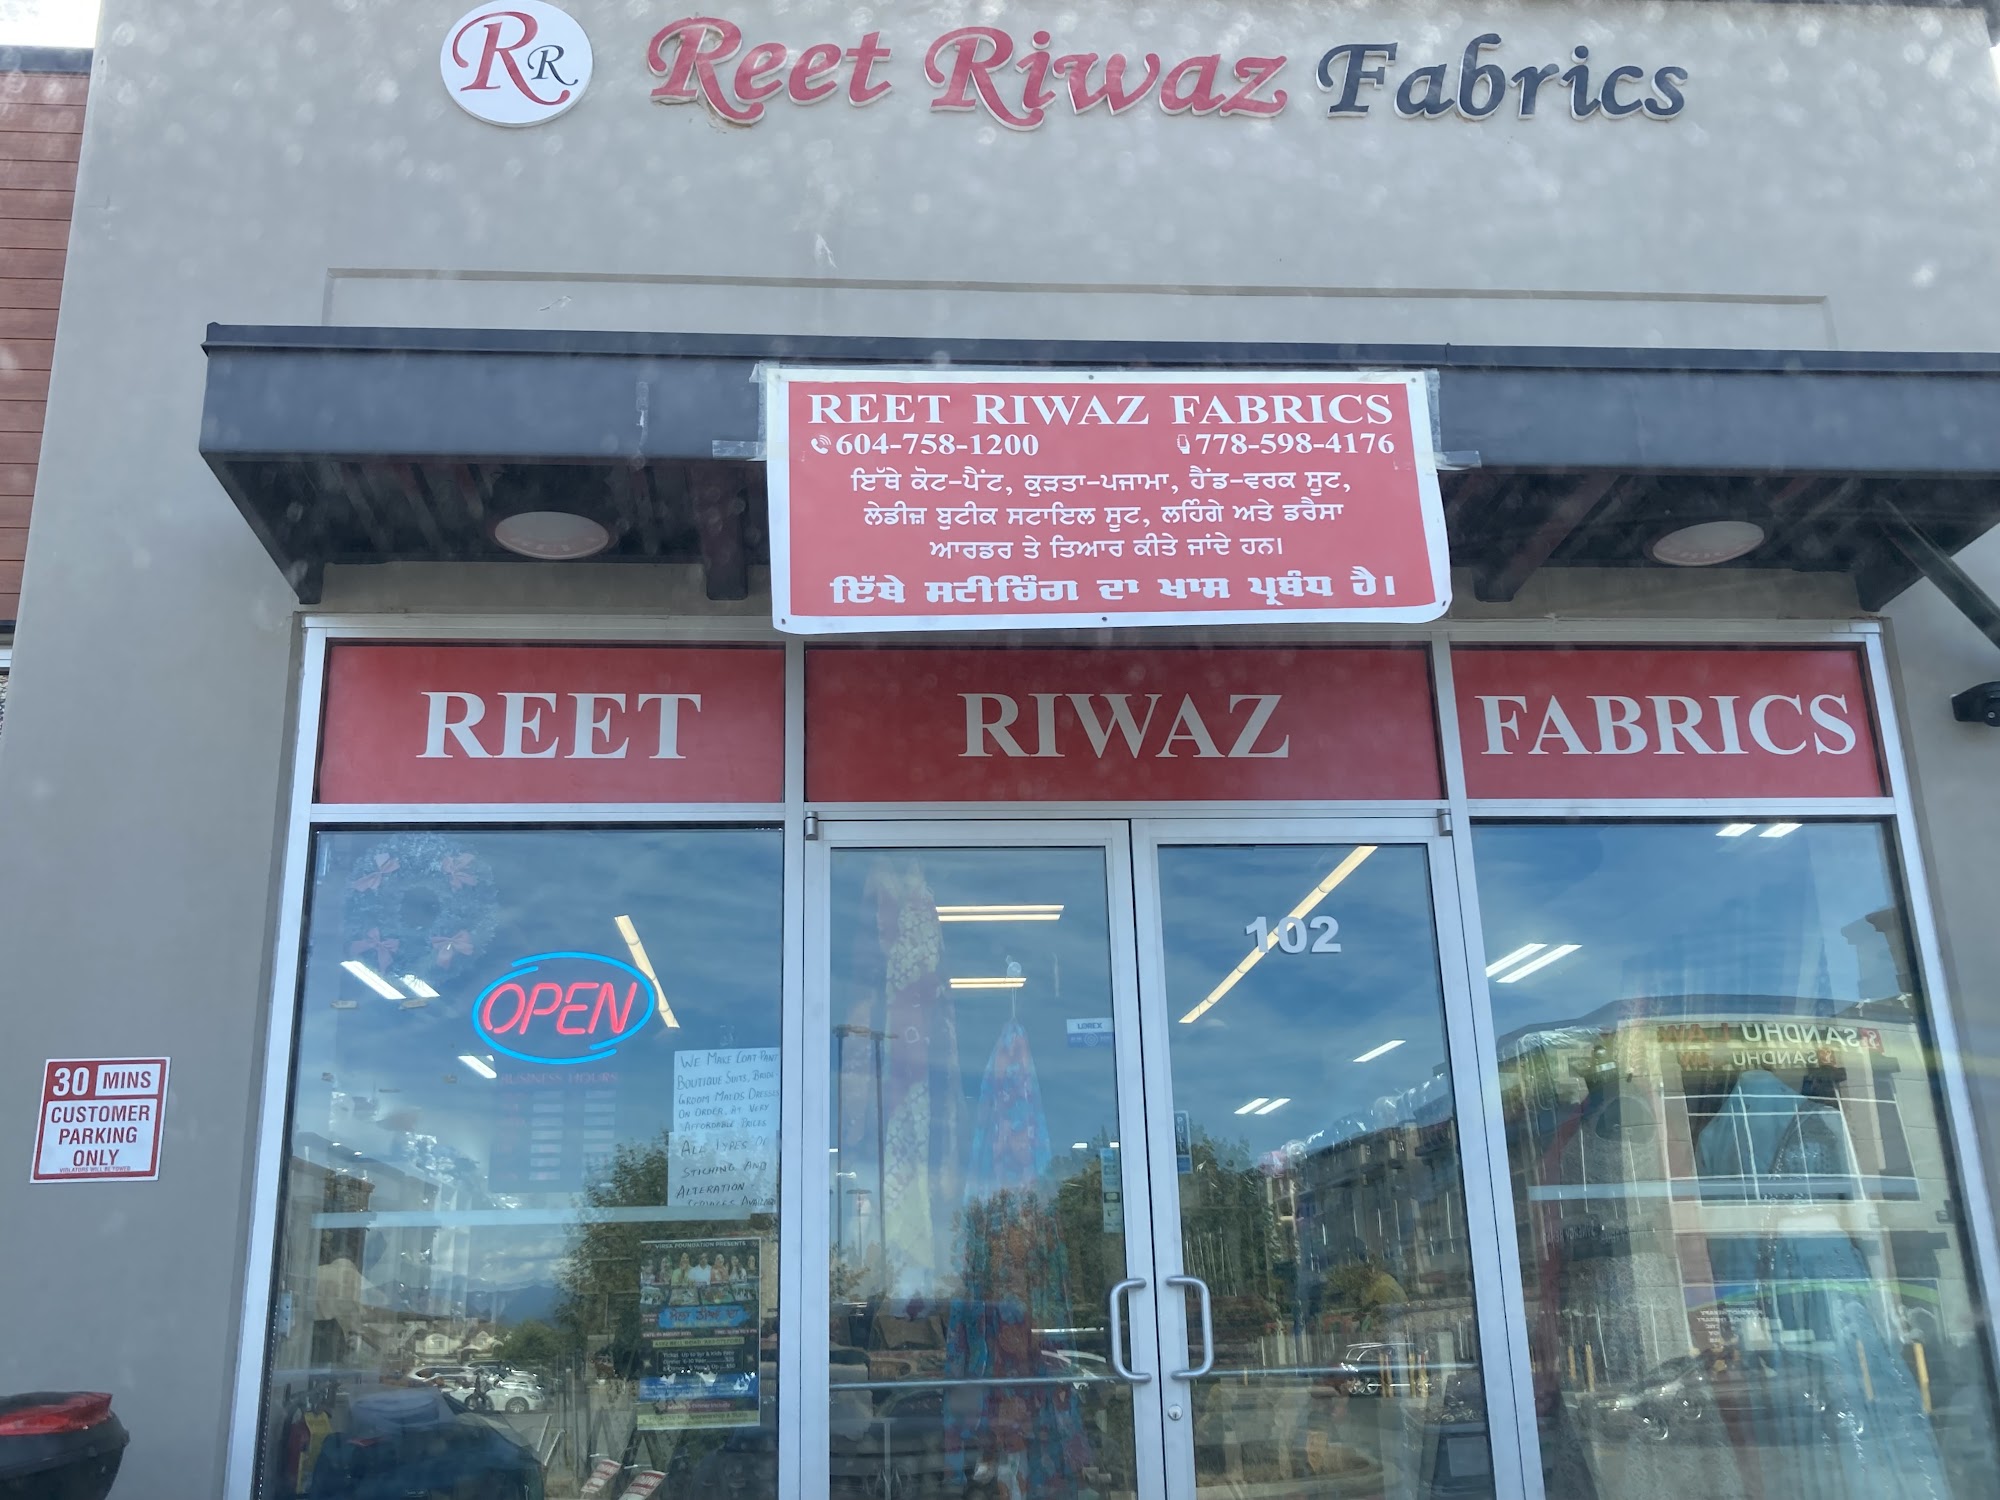 Reet Riwaz Fabrics